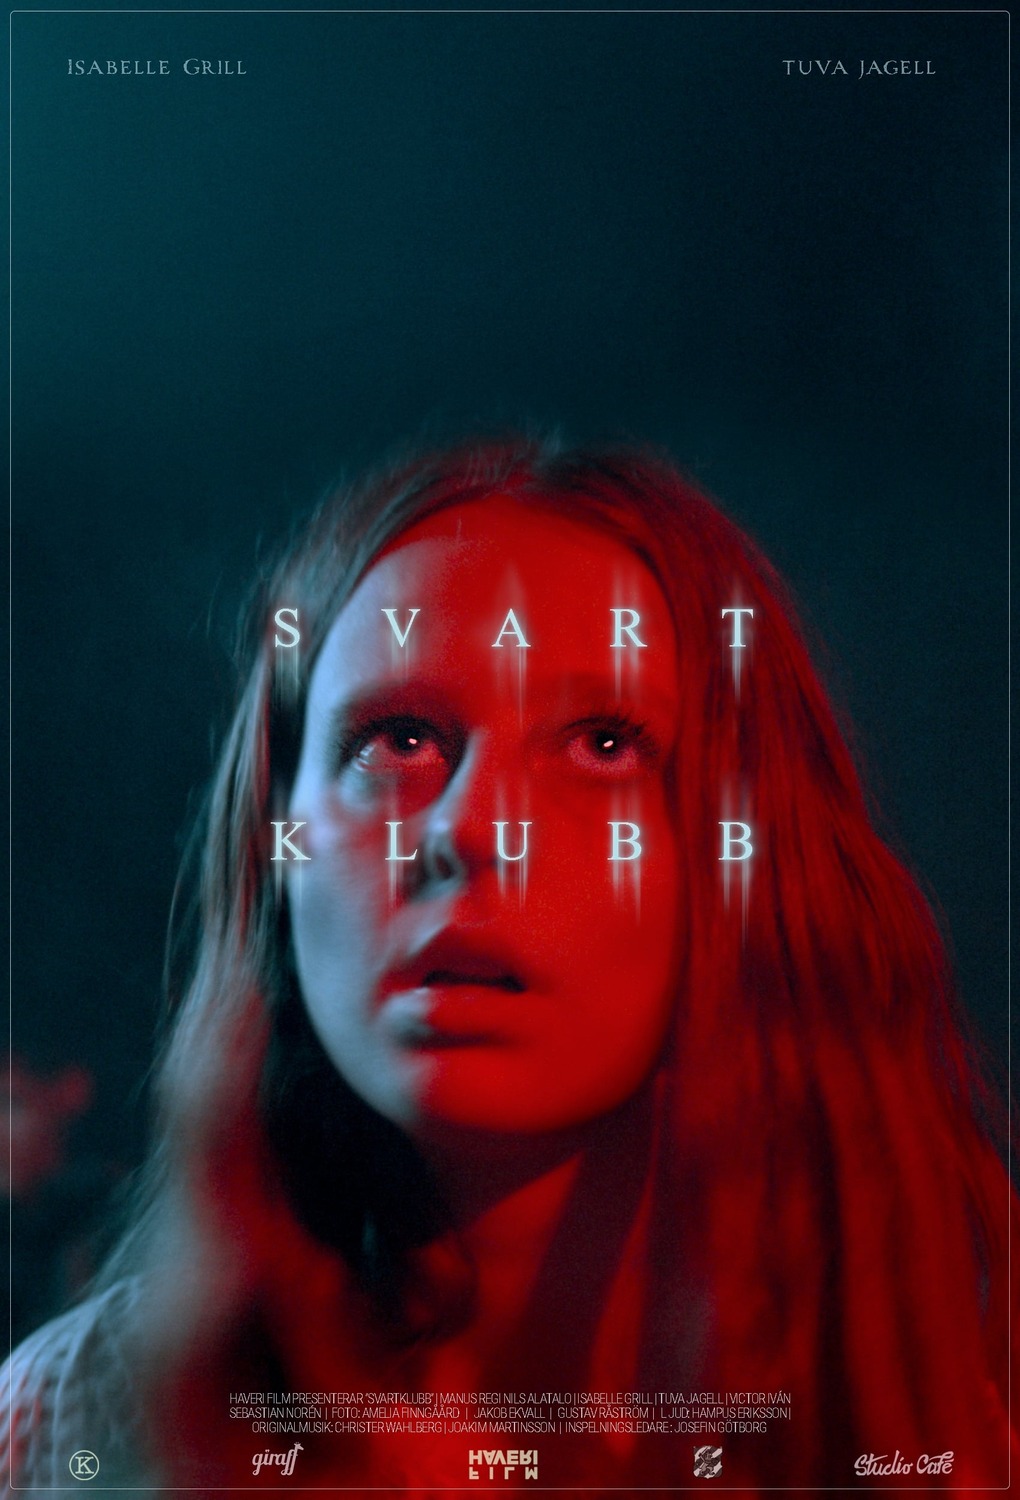 Extra Large Movie Poster Image for Svartklubb 